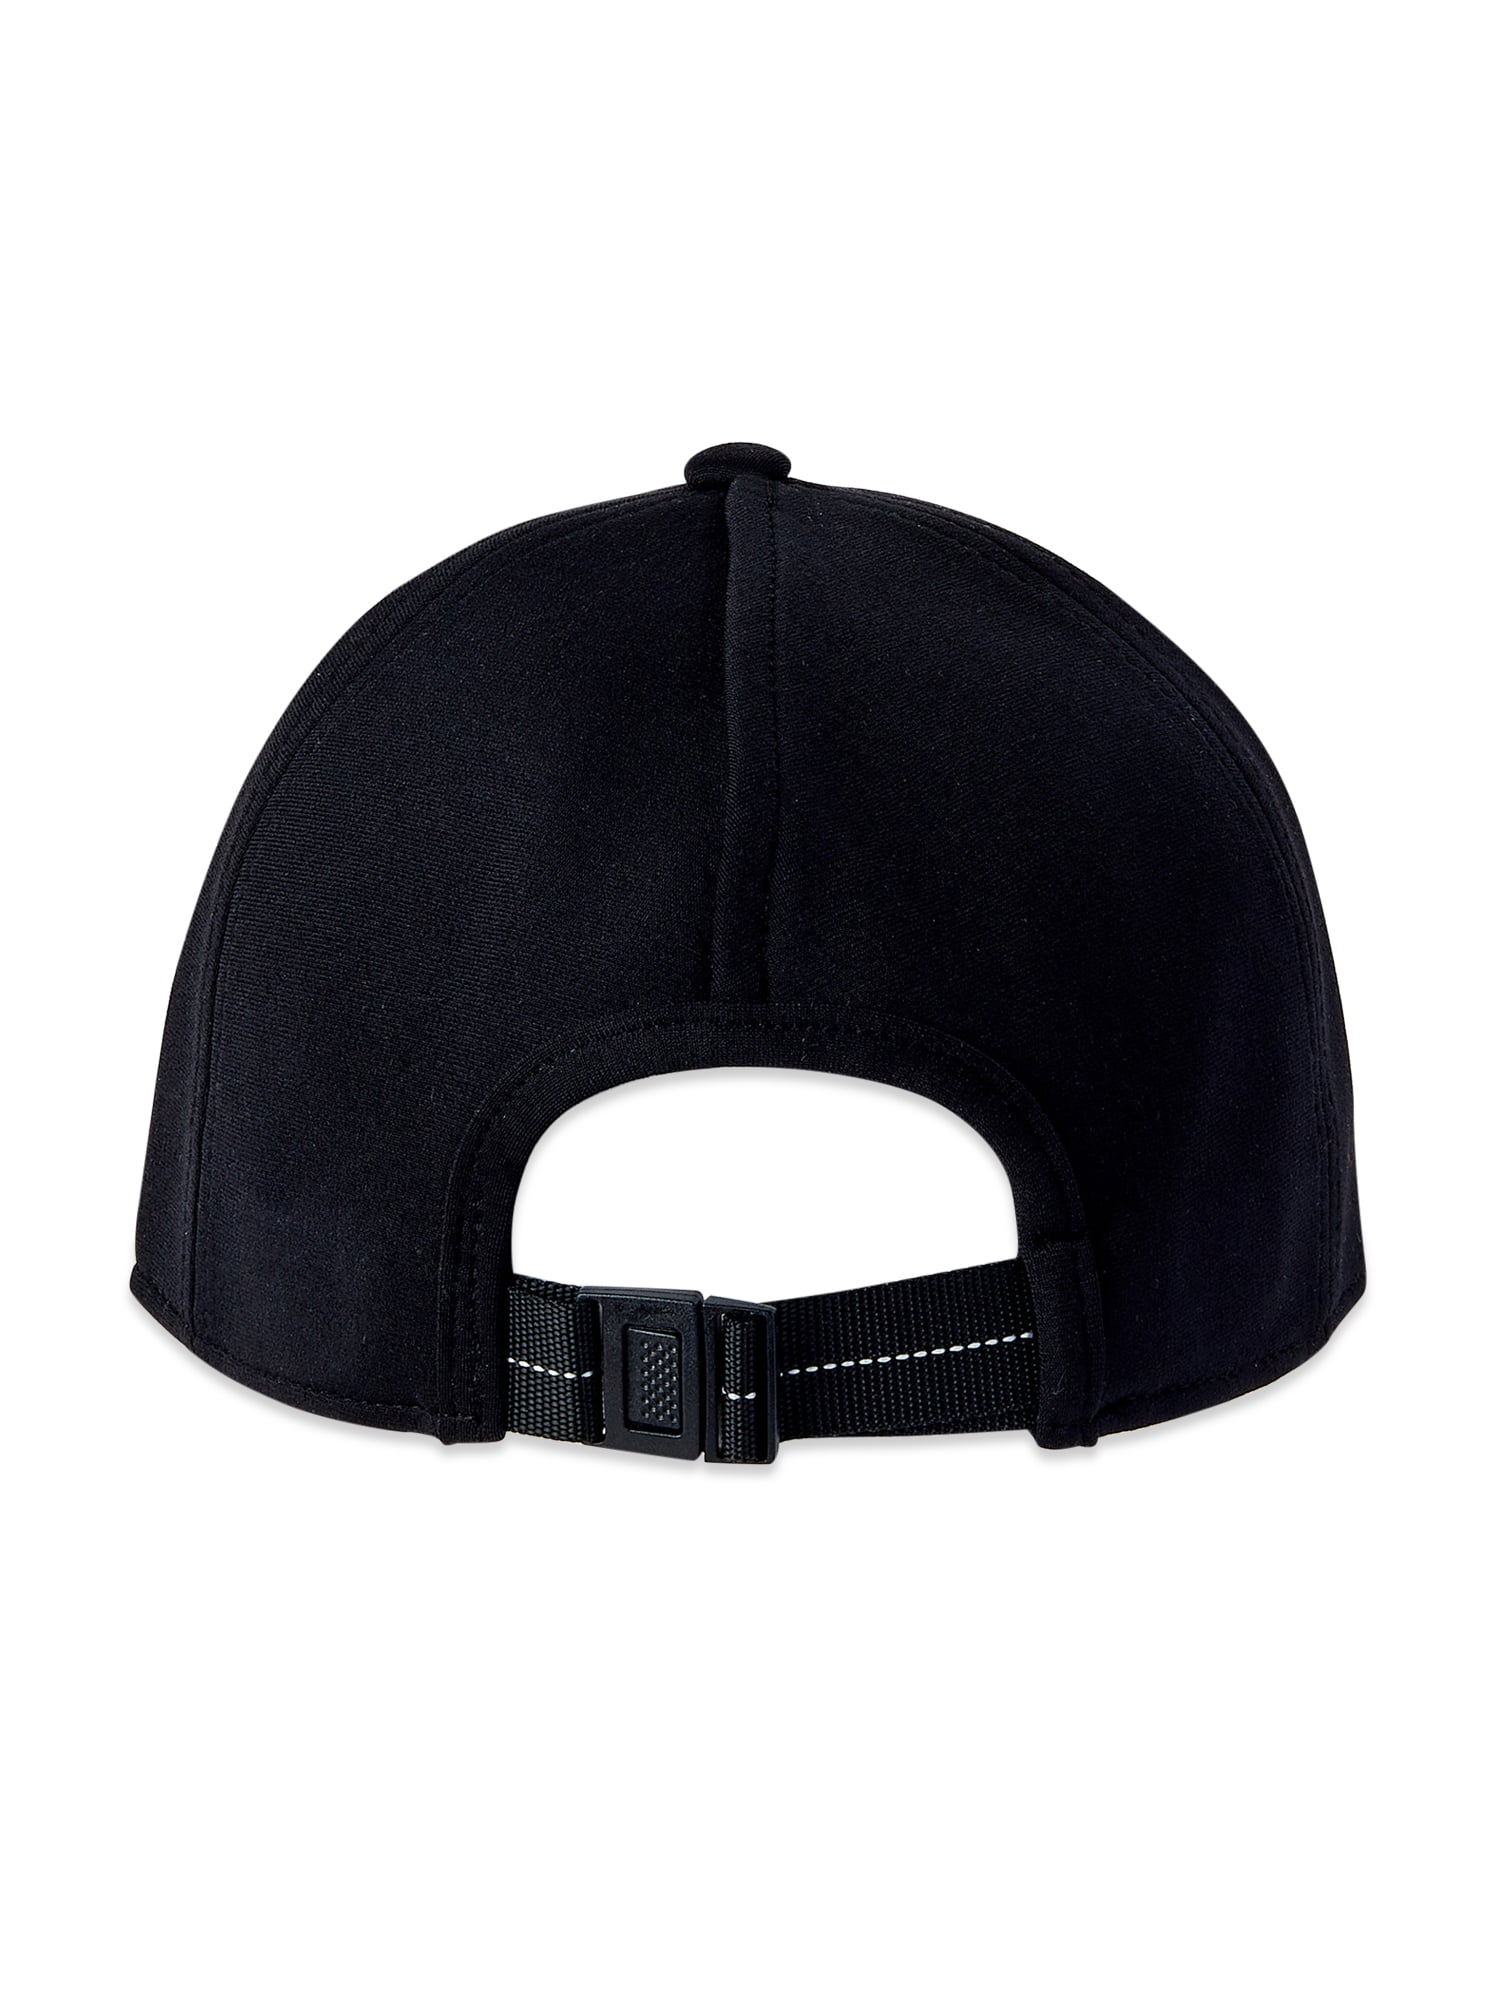 PEEKABOOS®  4-IN-1 Ponytail Hat - Eclipse